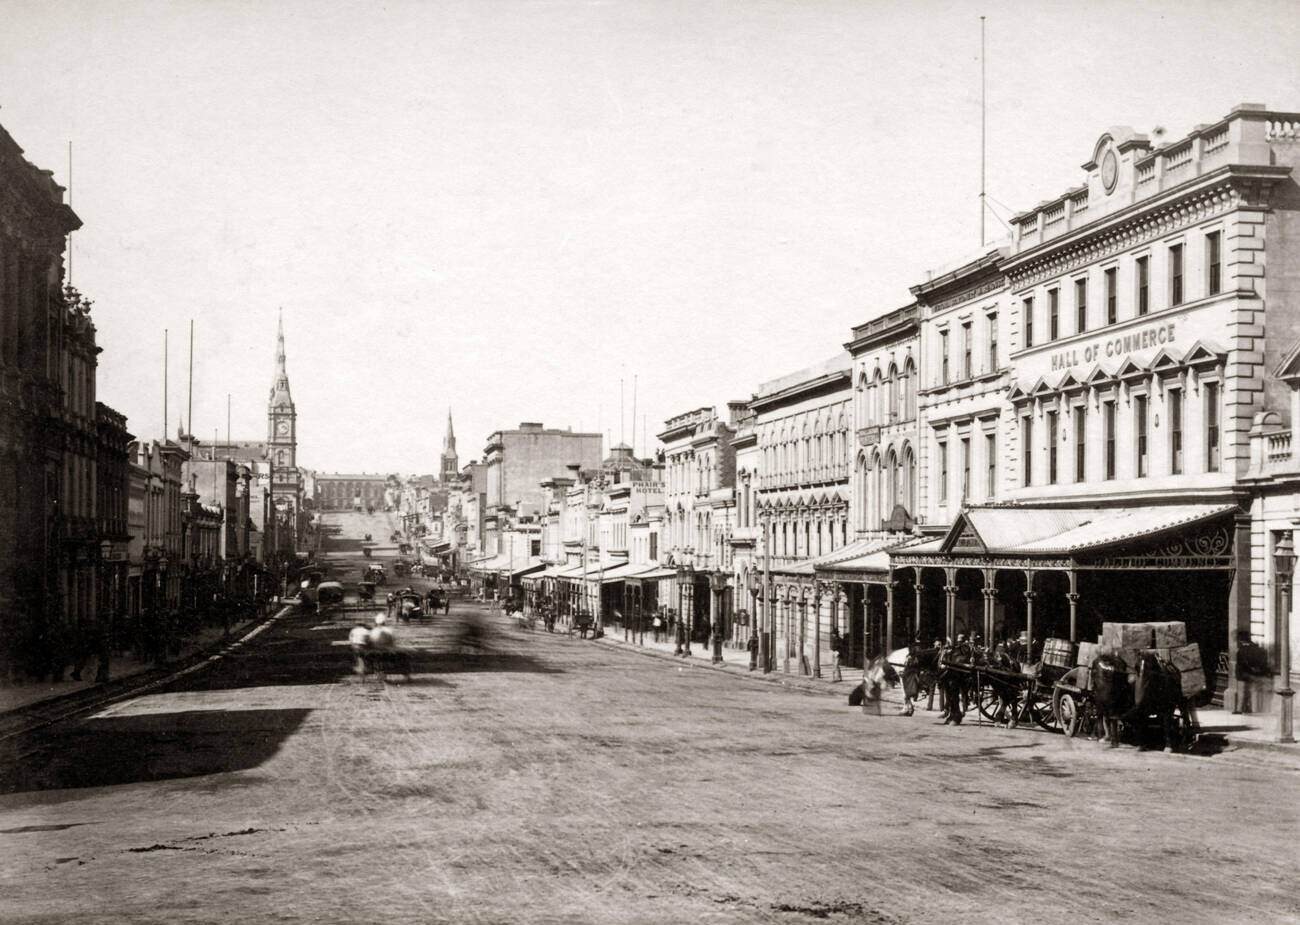 Collins Street Melbourne, 1880s